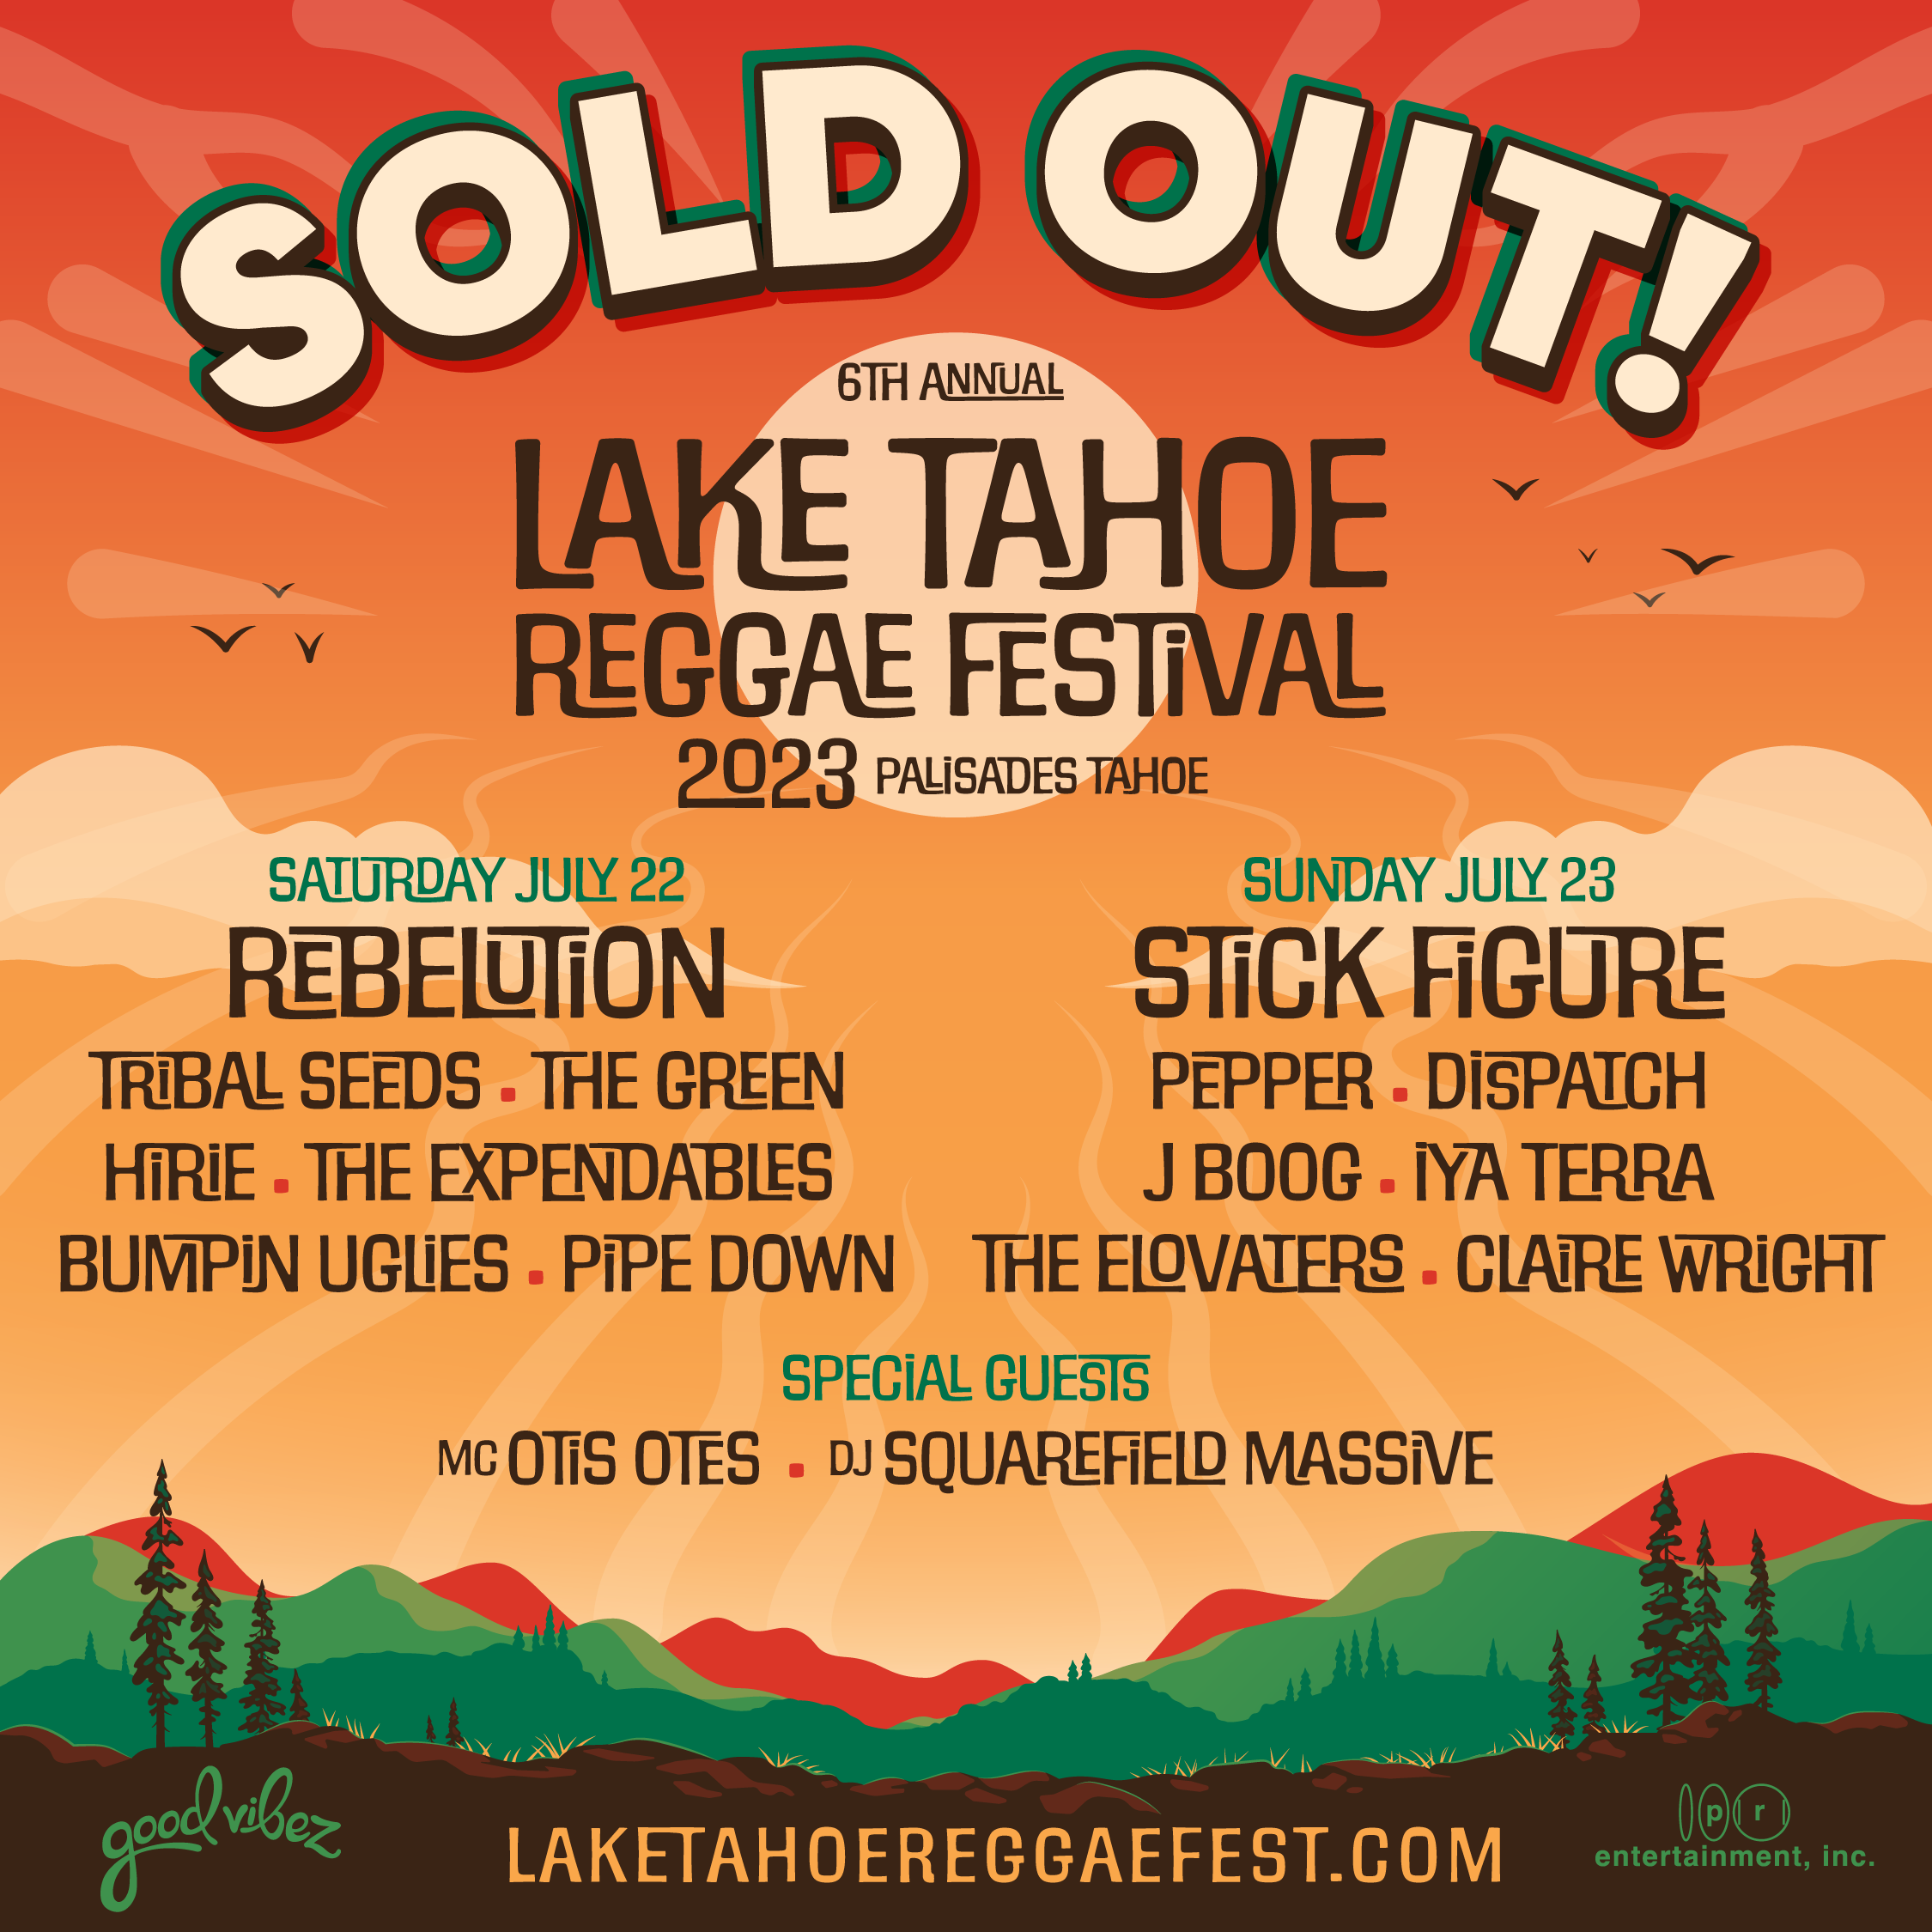 Lake Tahoe Reggae Festival Tickets at Palisades Tahoe in Olympic Valley